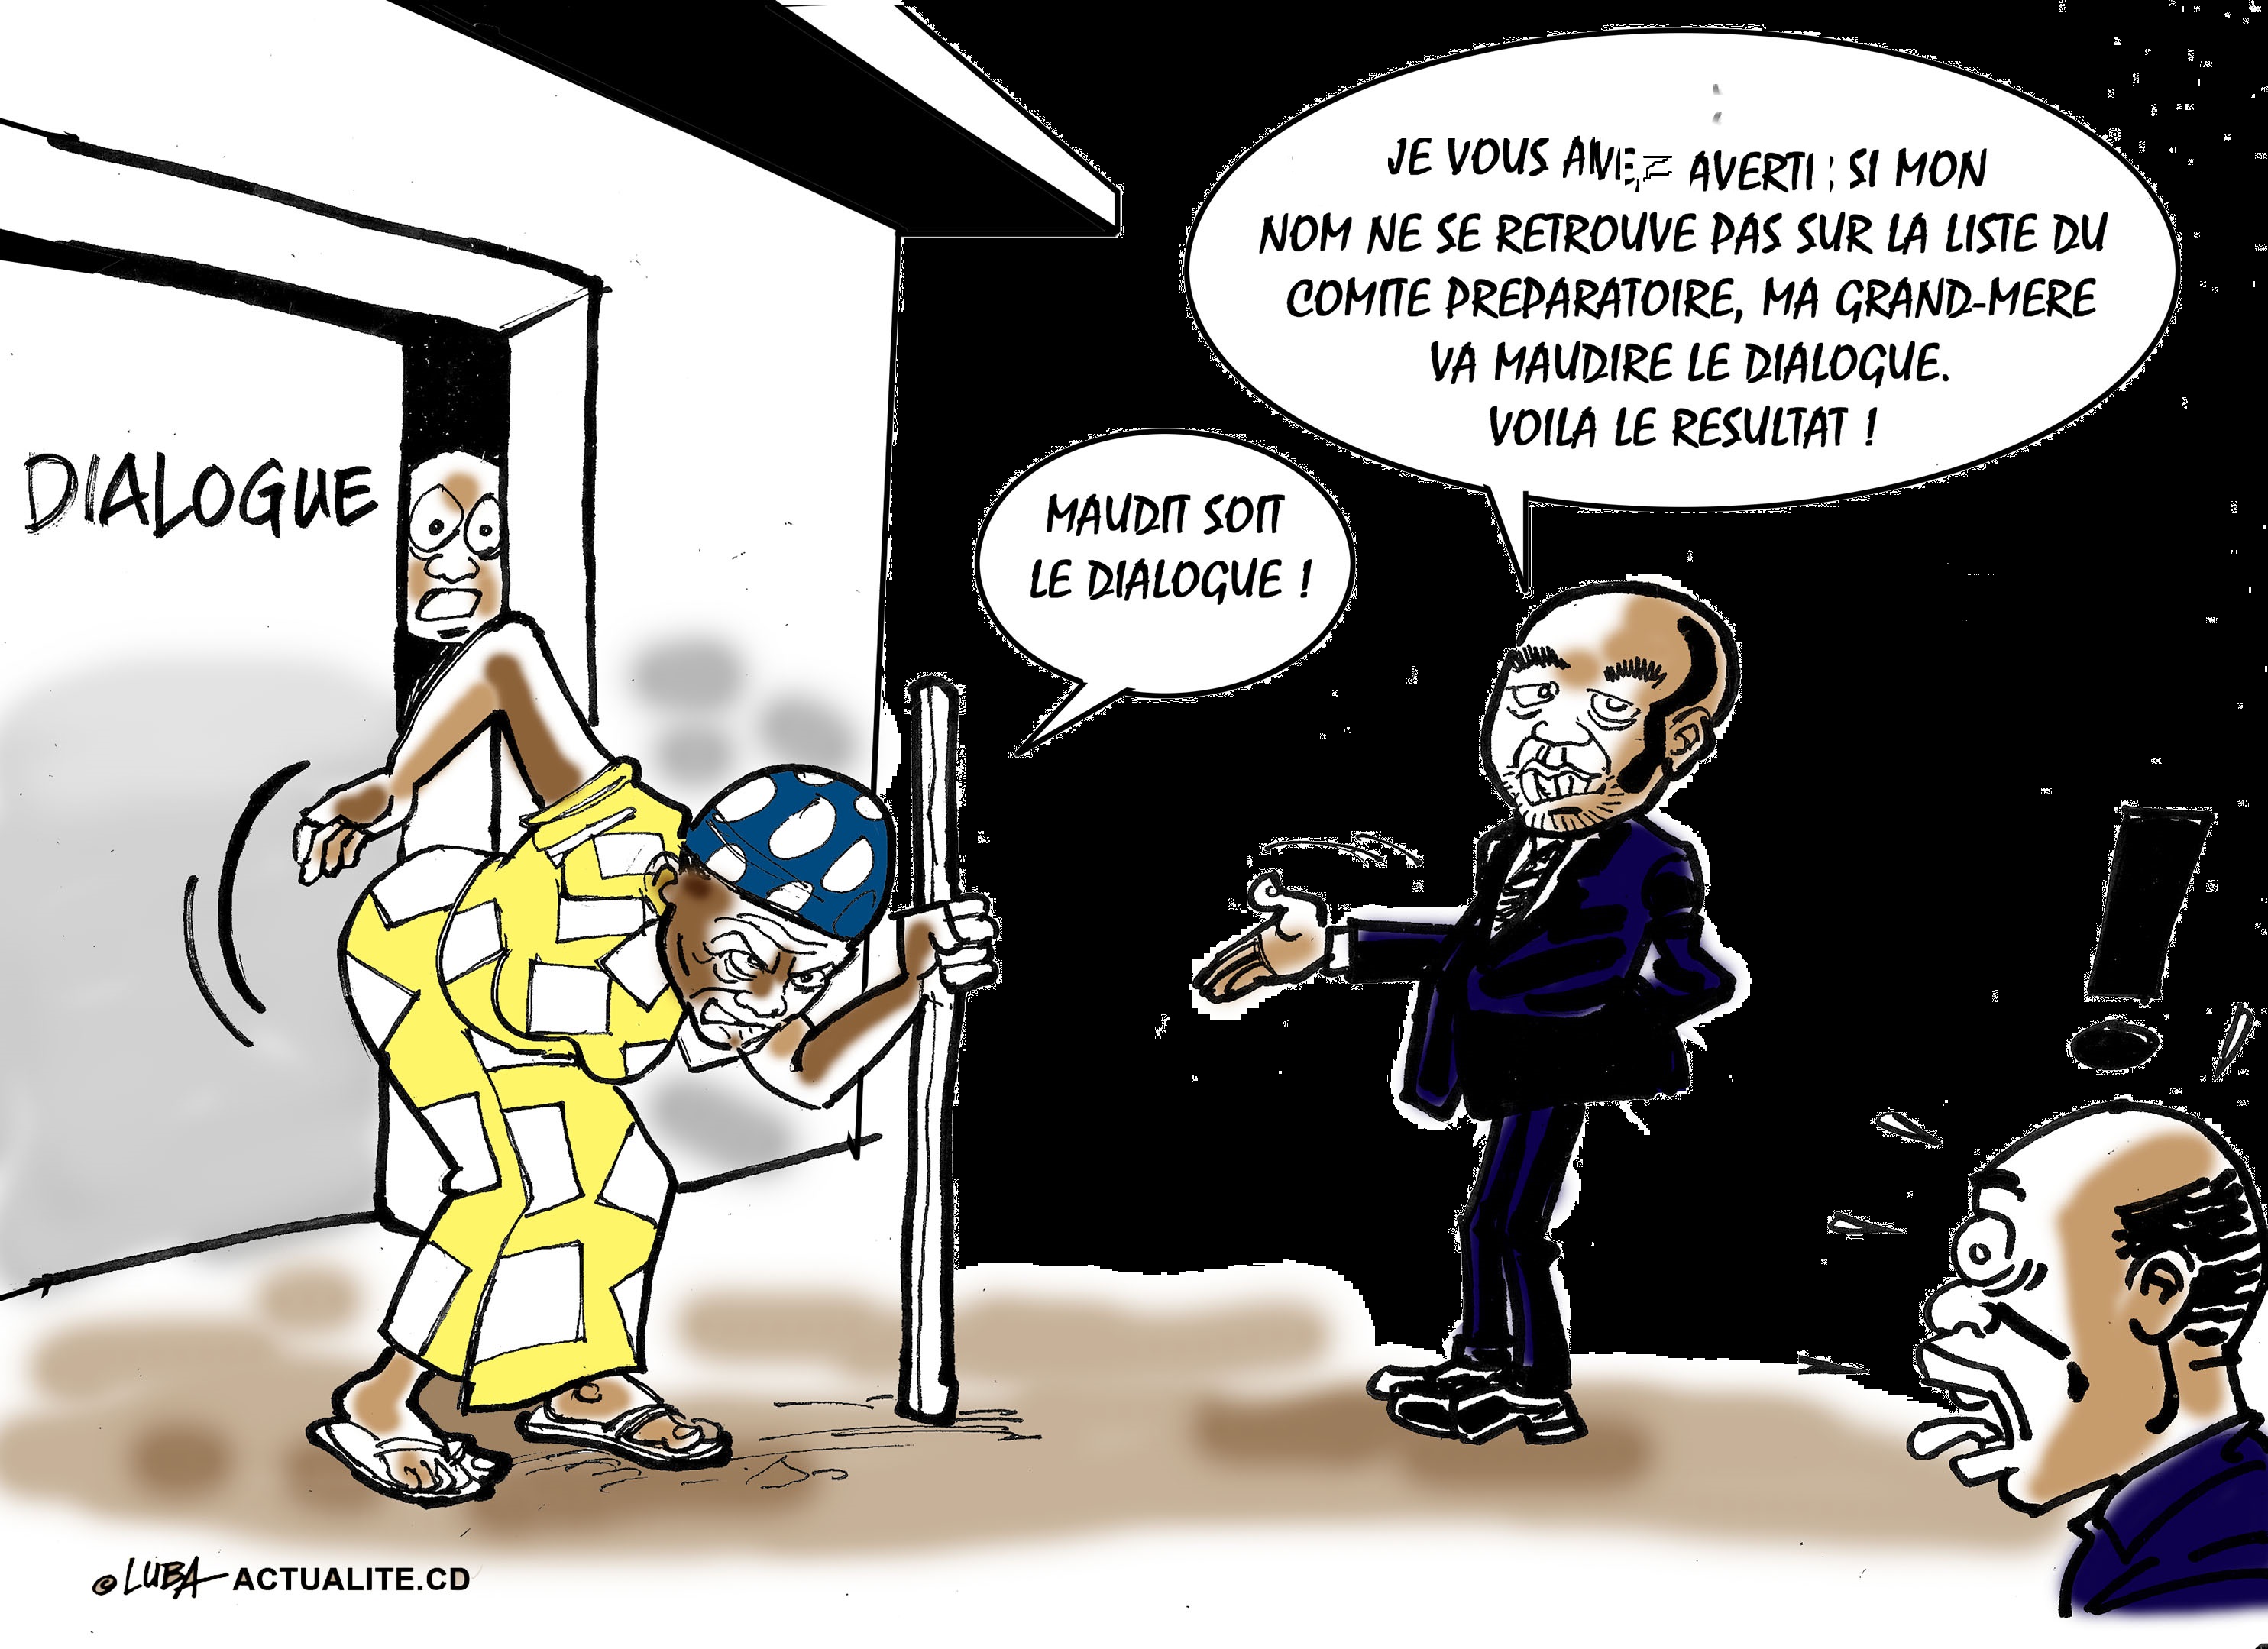 Caricature : Dialogue, la grand-mère de Bitakwira recherchée | Actualite.cd